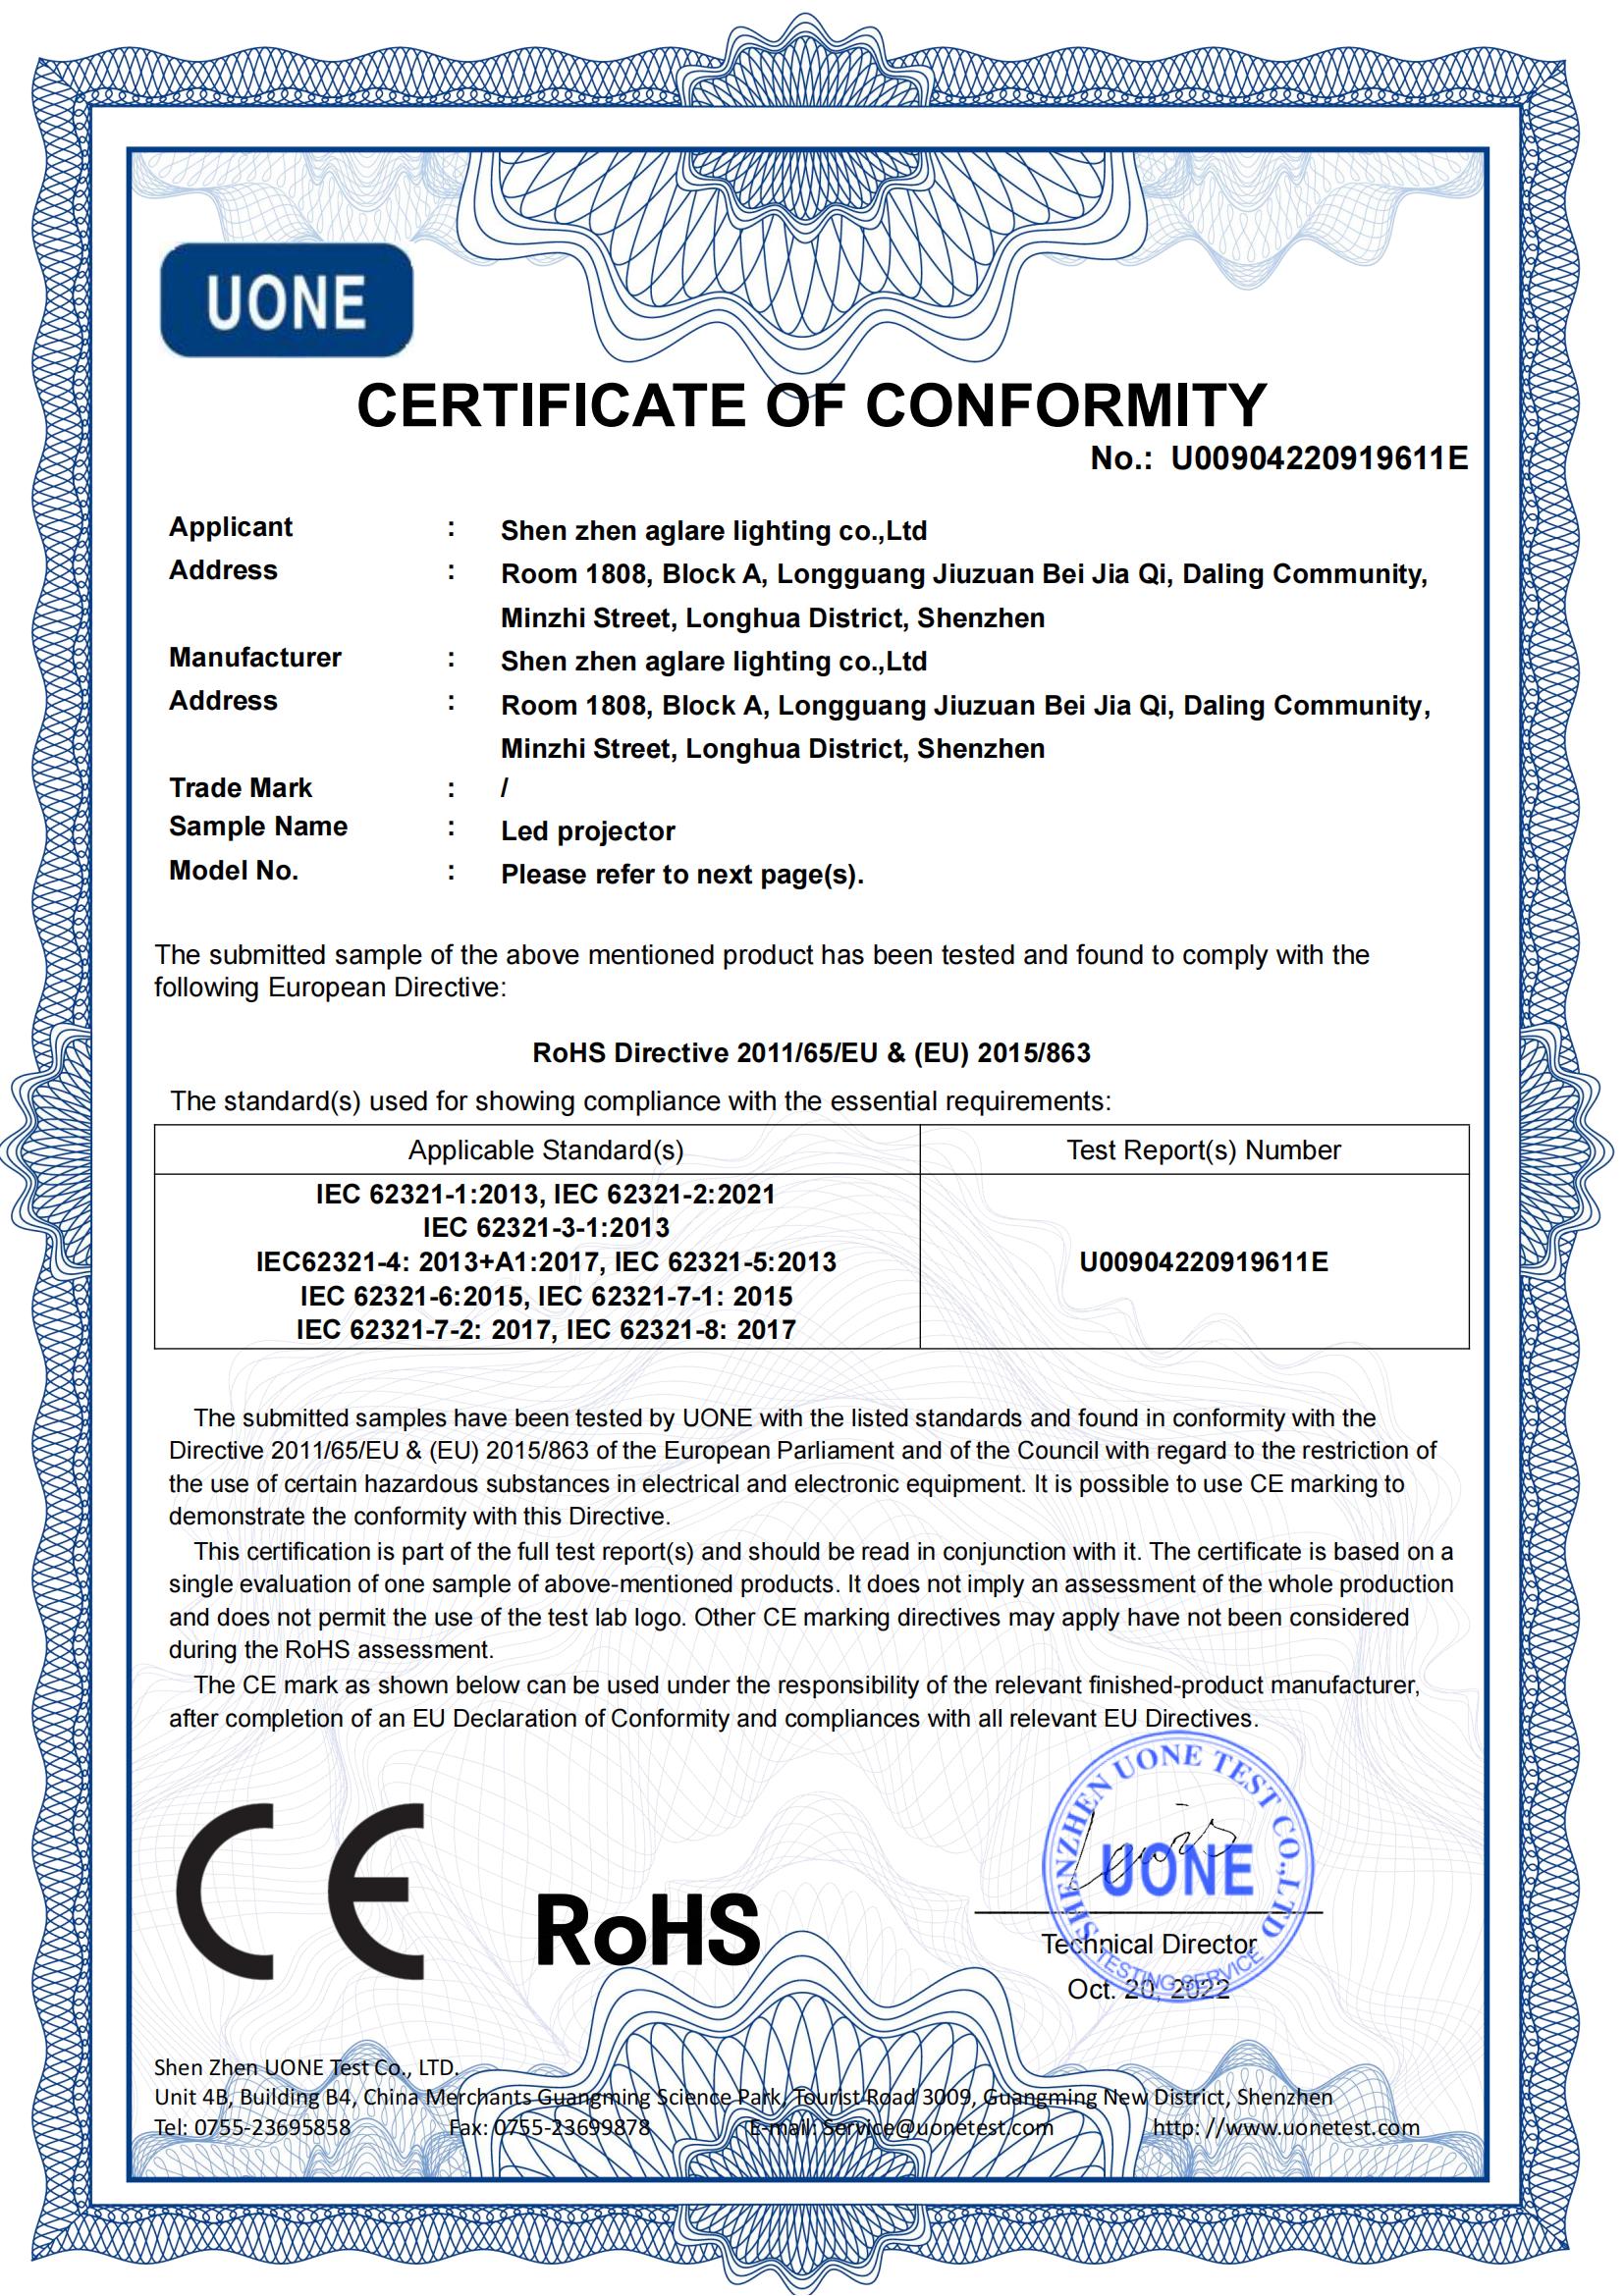 RGB led floodlight RoHS Certification_00.jpg